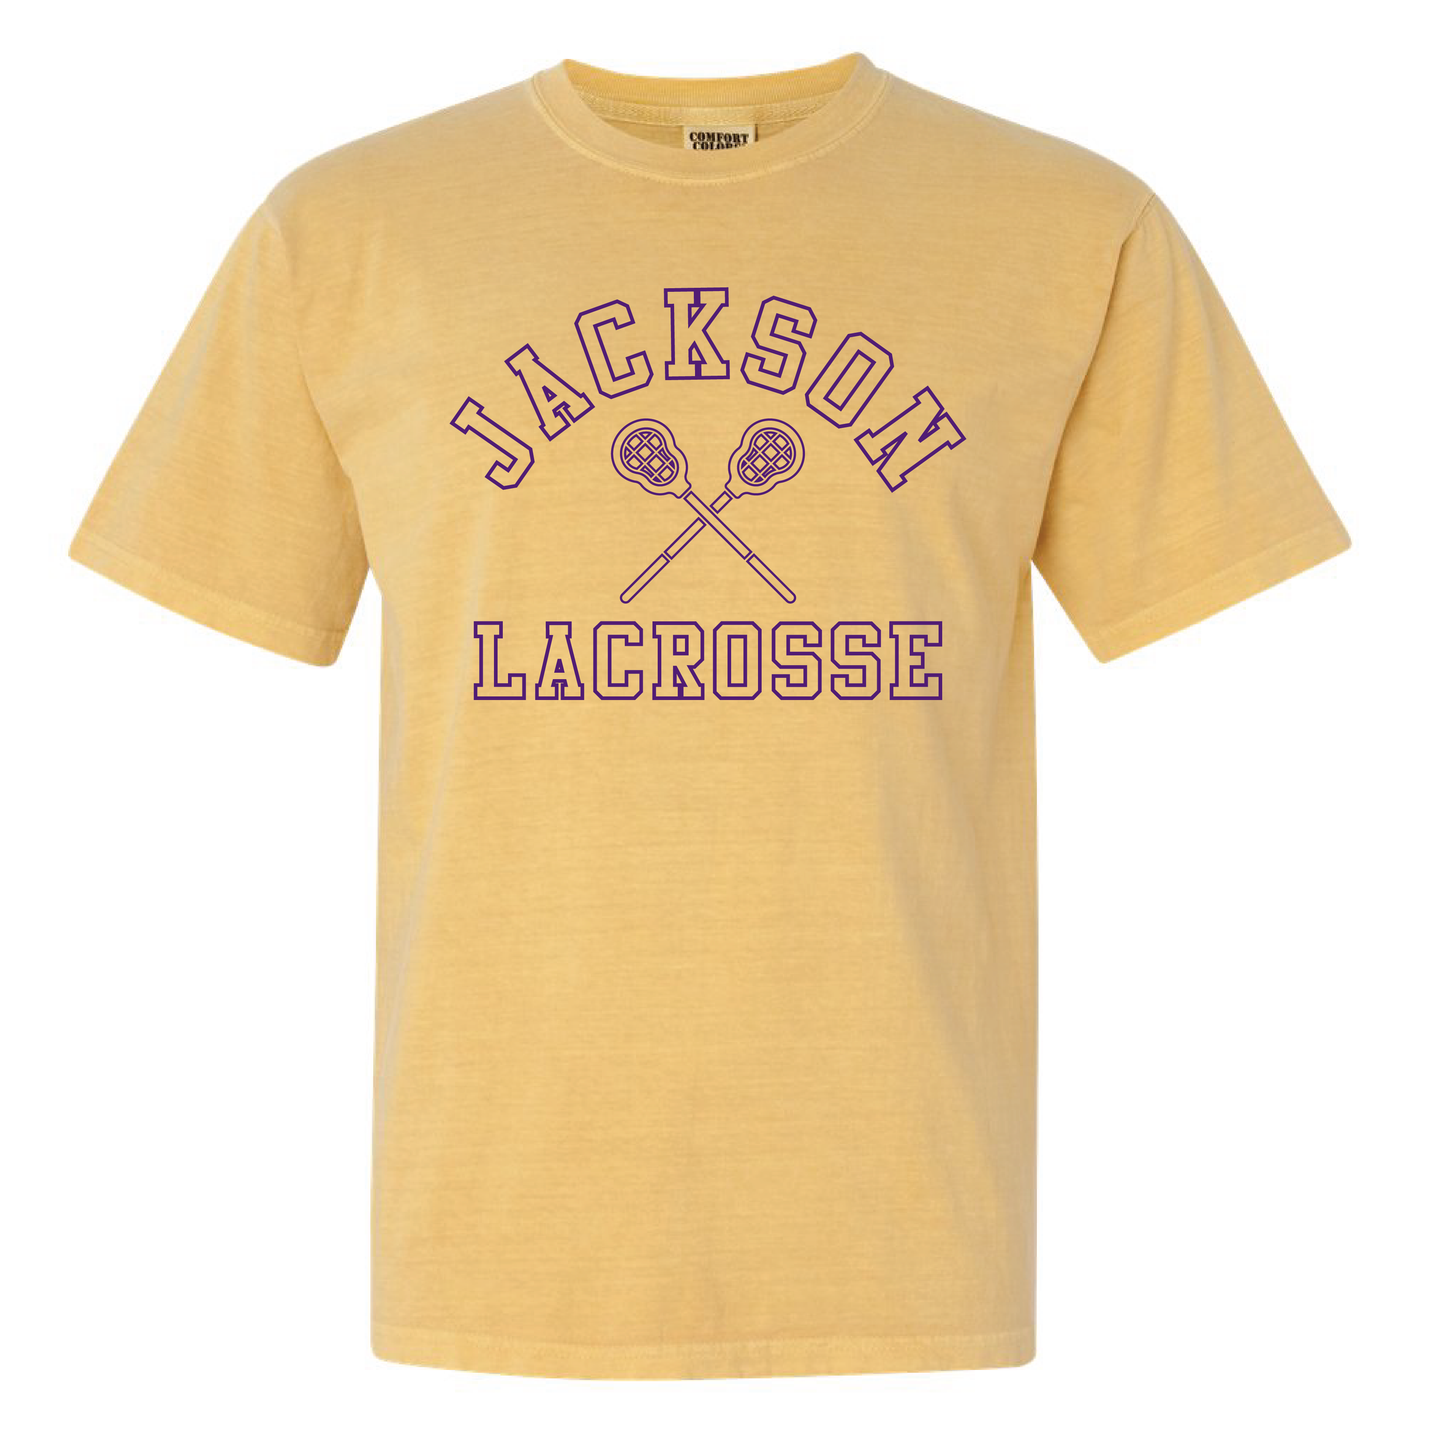 Jackson Lacrosse Vintage Yellow T-shirt